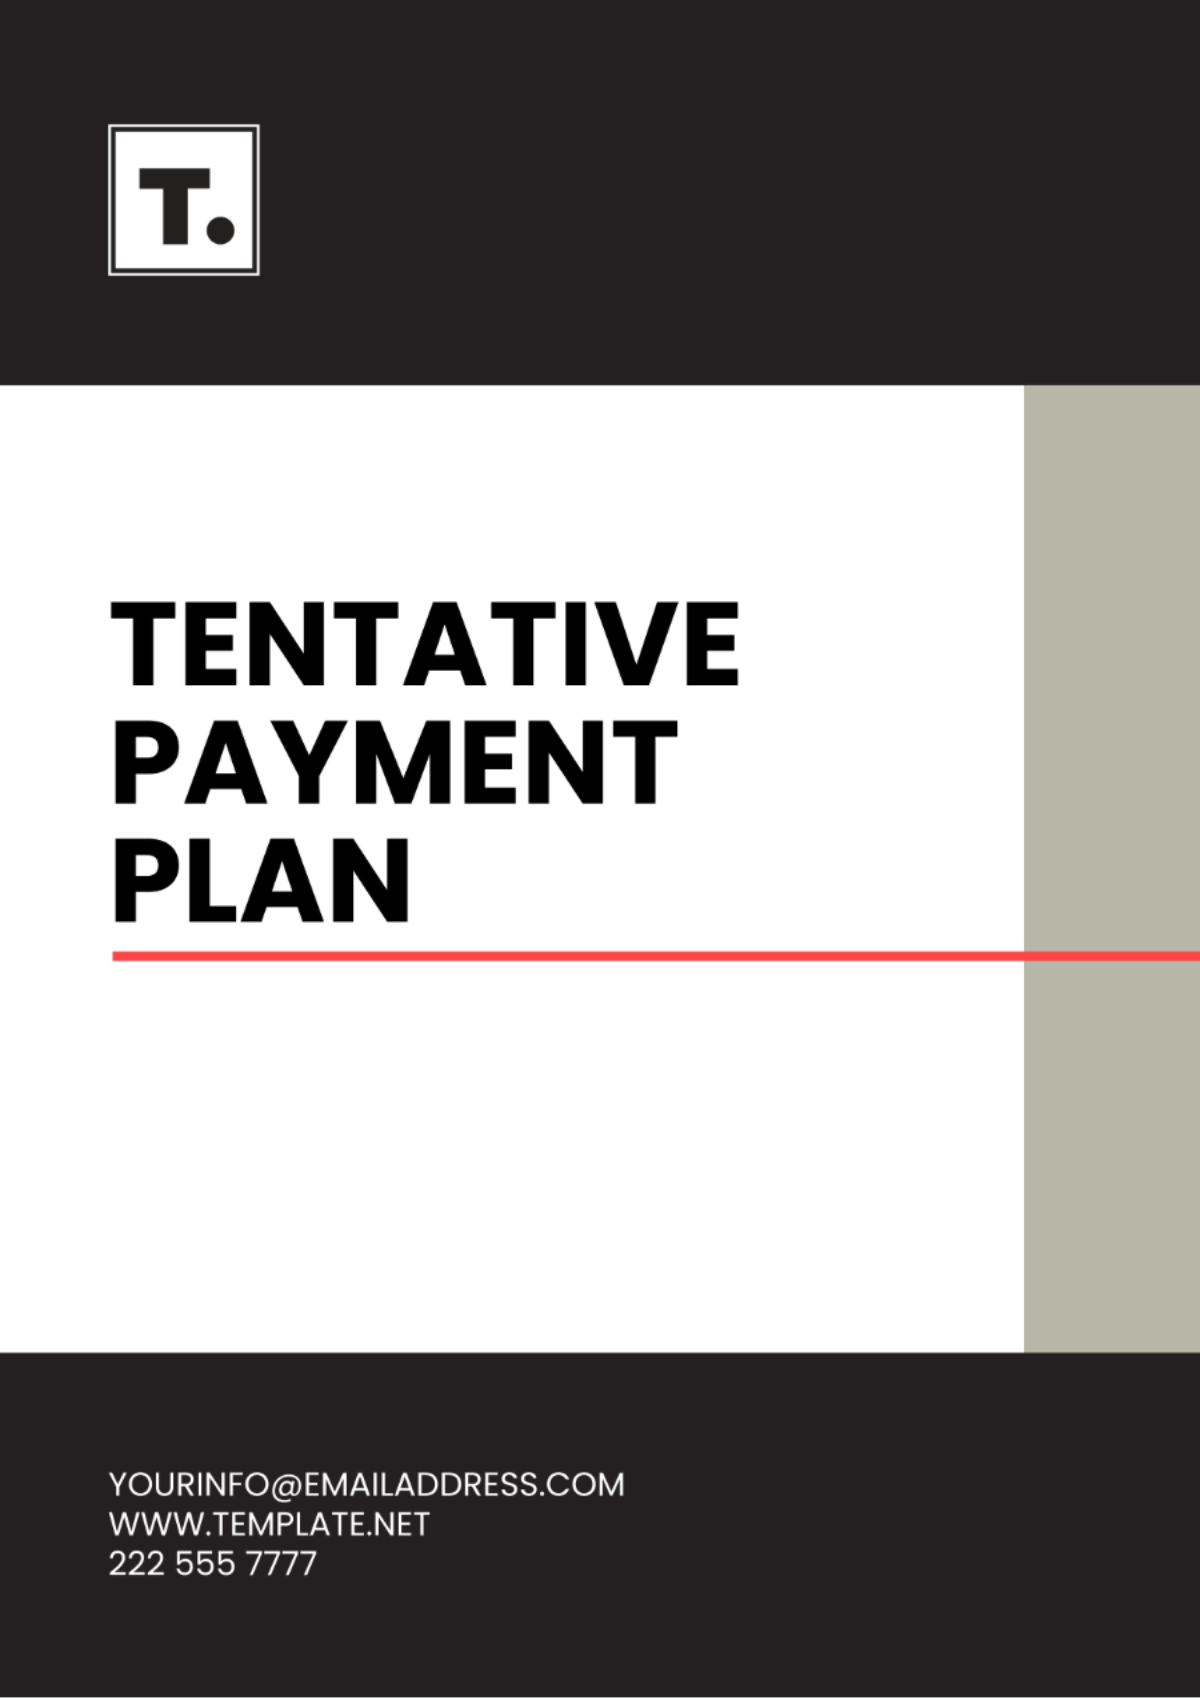 Free Tentative Payment Plan Template